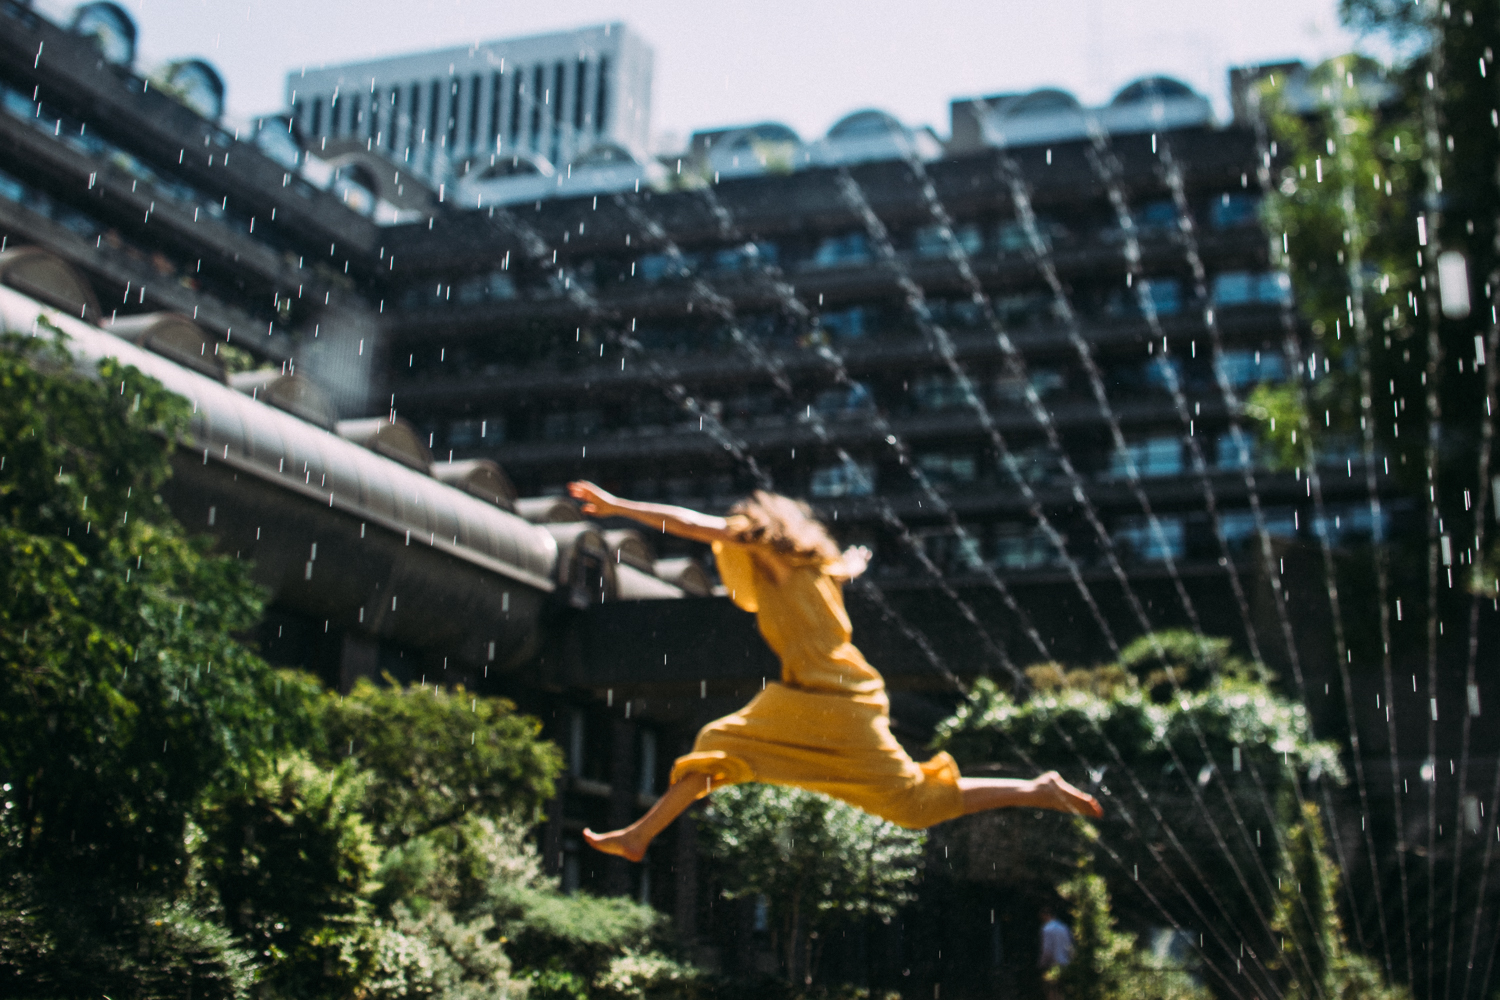 Model Sam Payne jumps through sprinklers at the Barbican